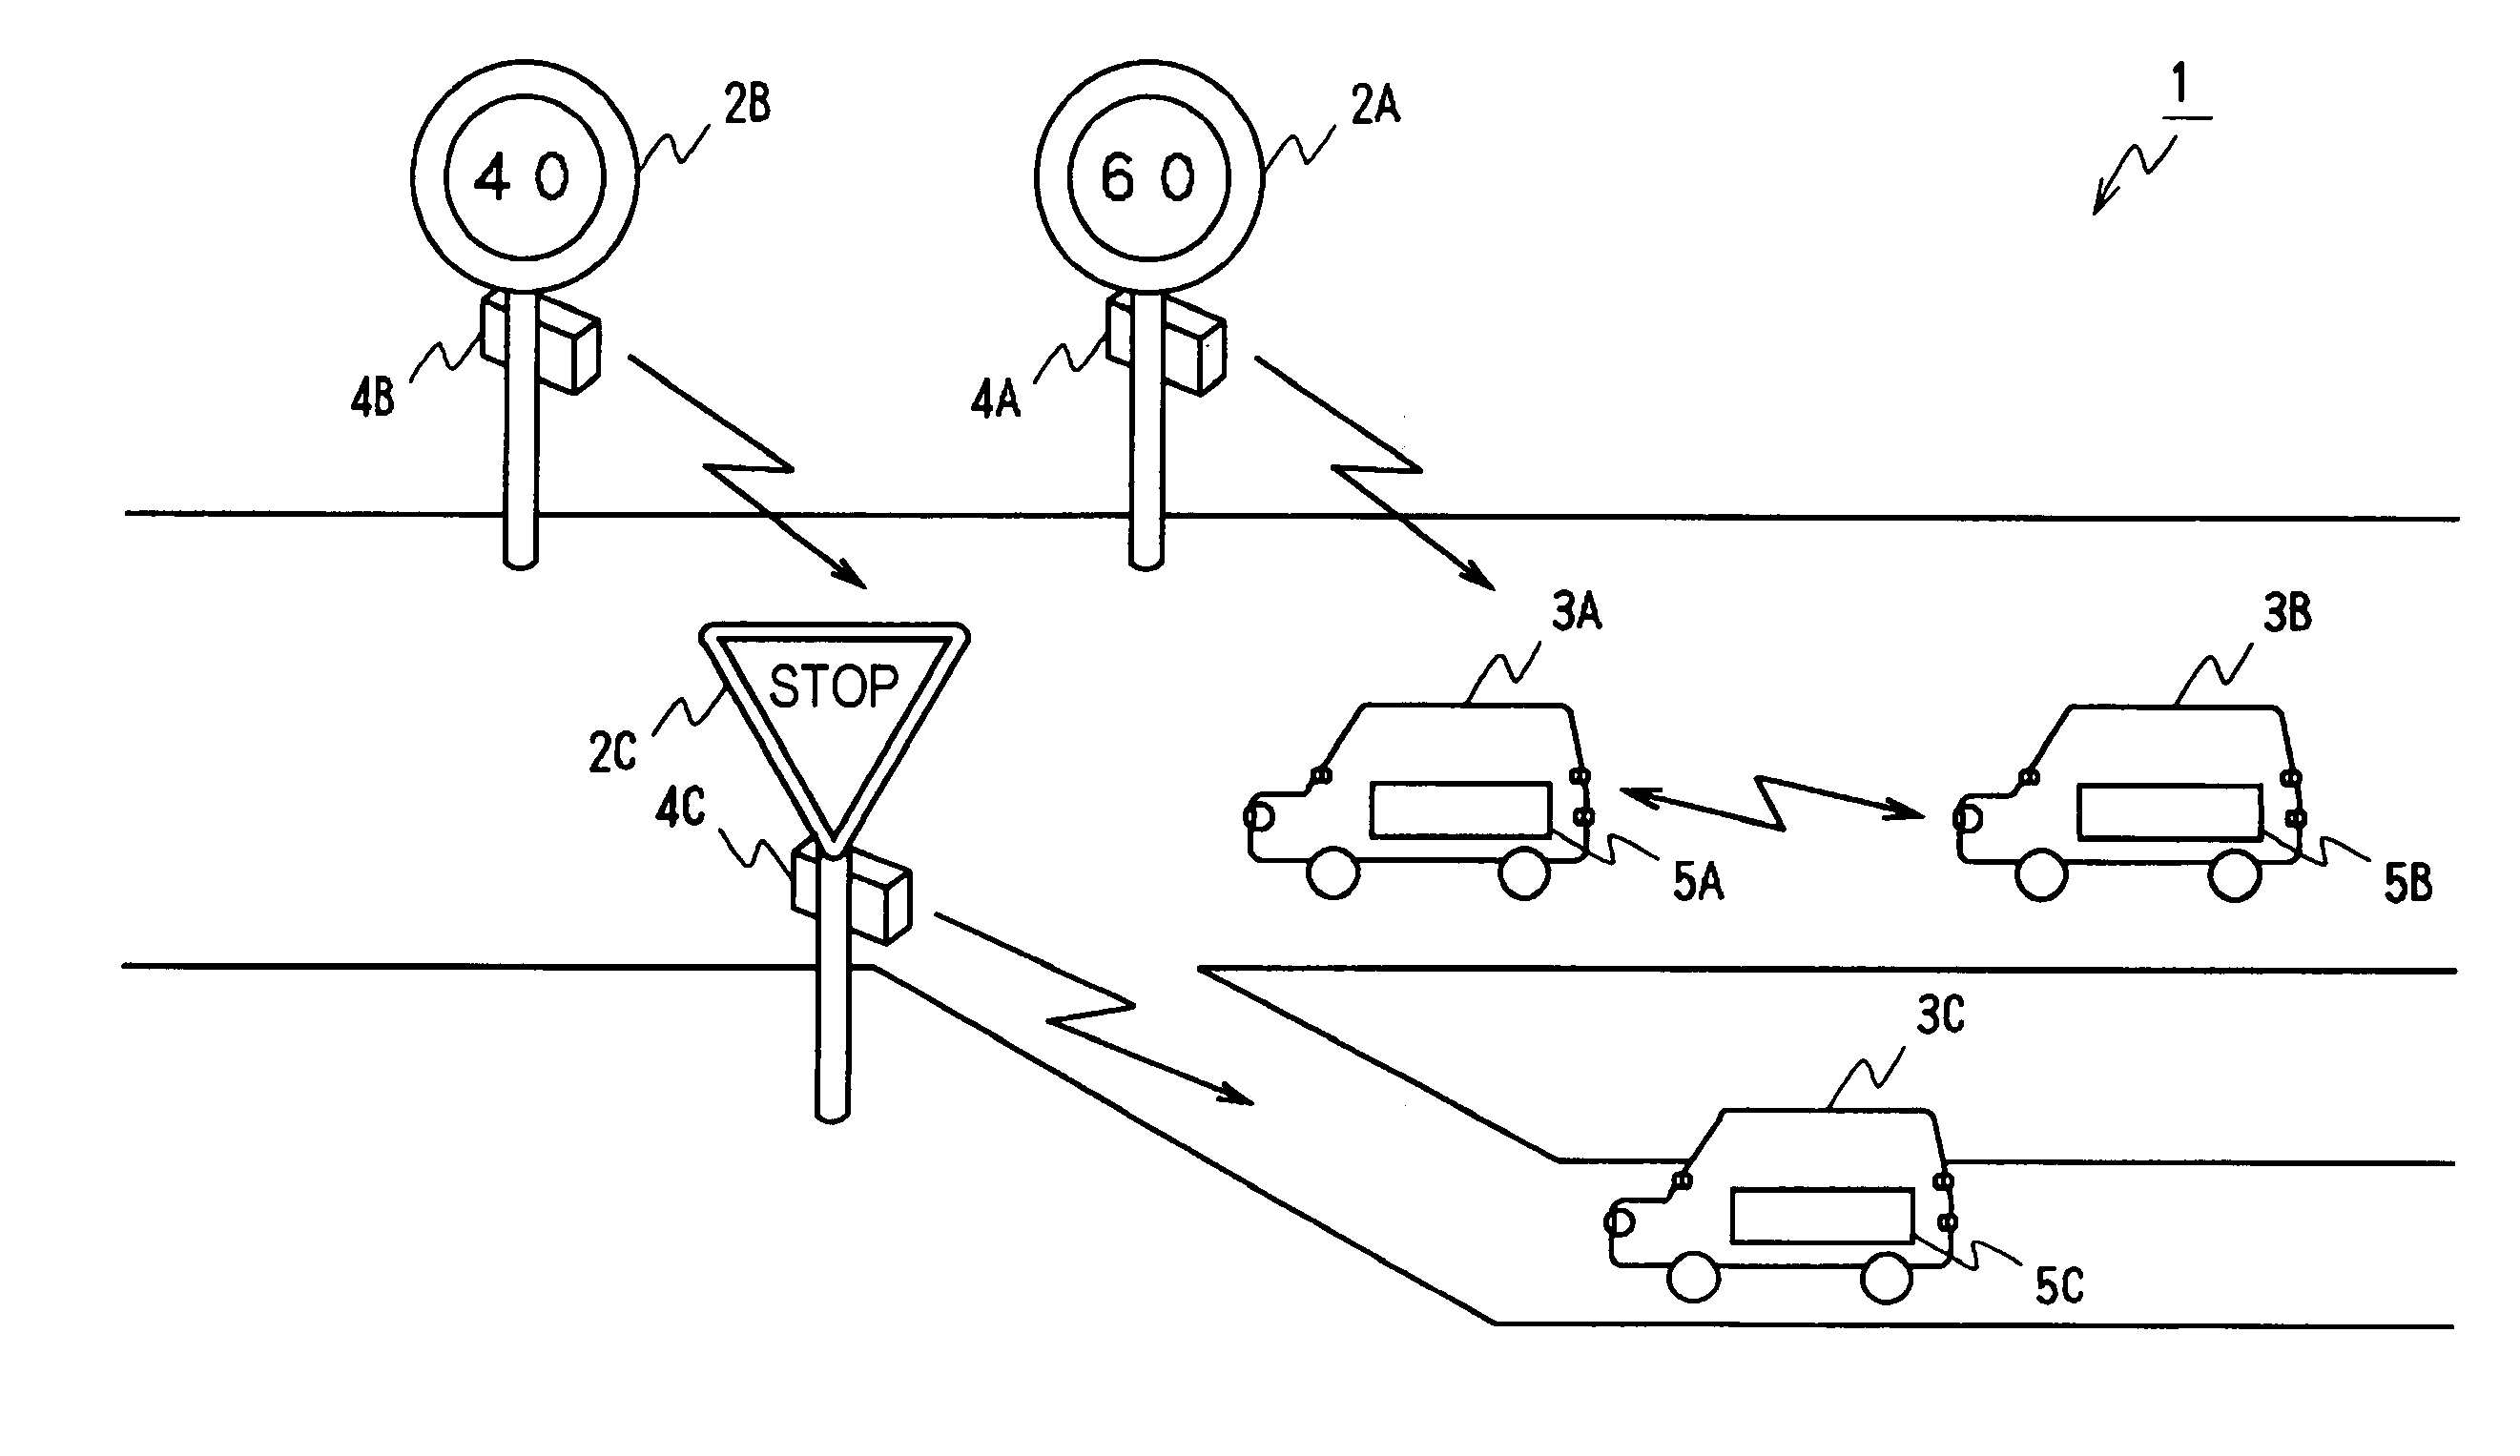 Optical communication equipment and vehicle control method